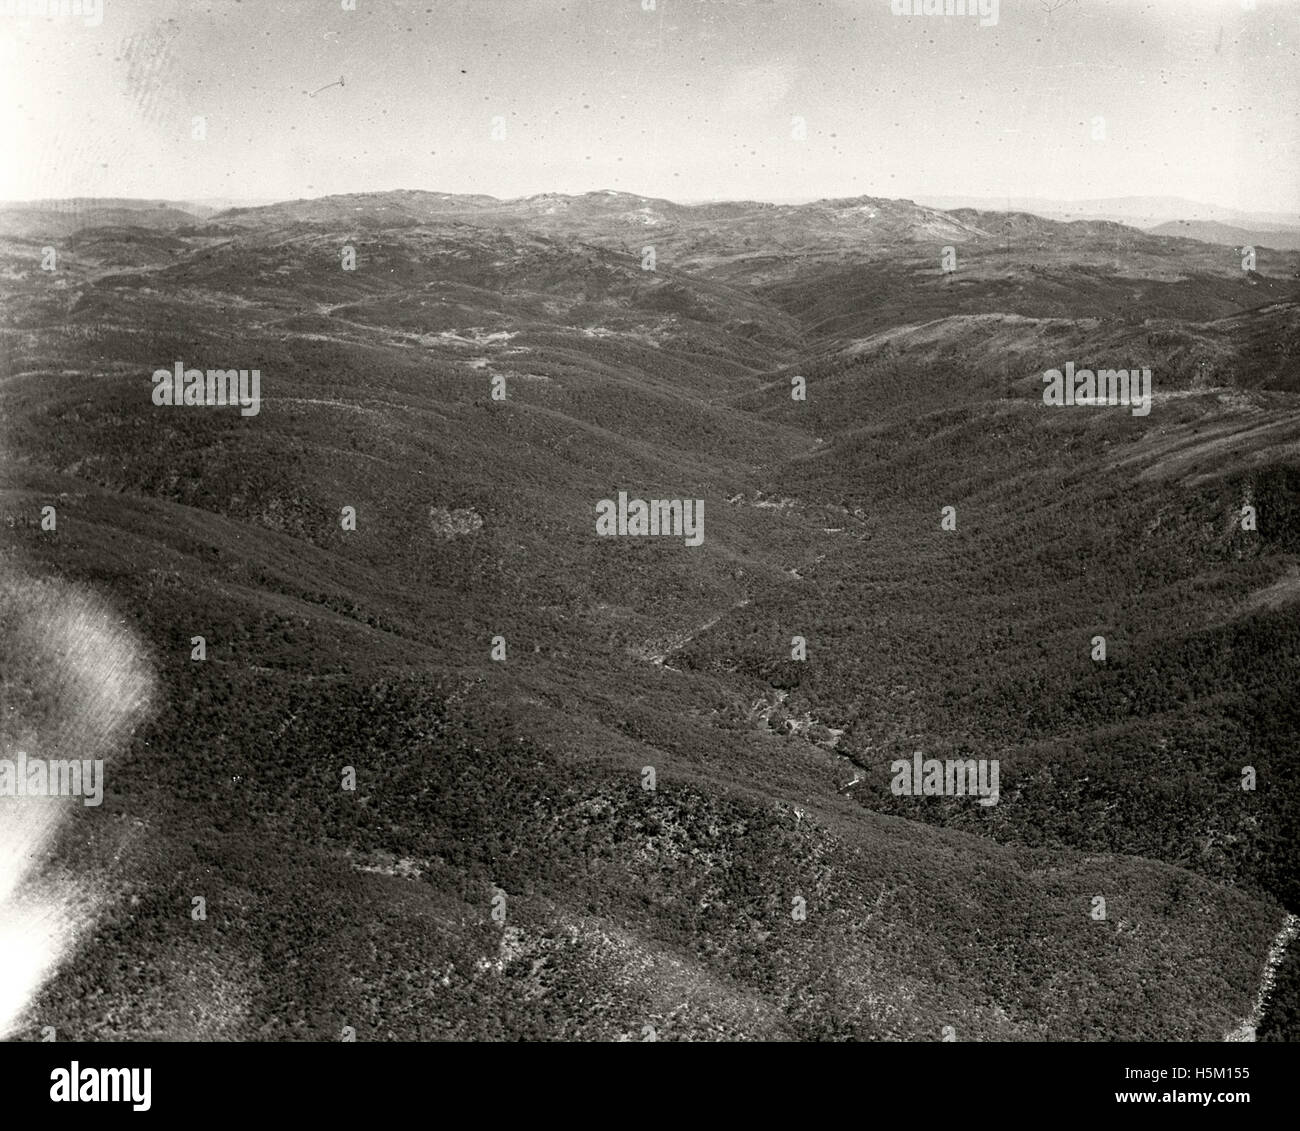 Kosciusko Snowy River Gorge & Summit - 11 March 1937 Stock Photo